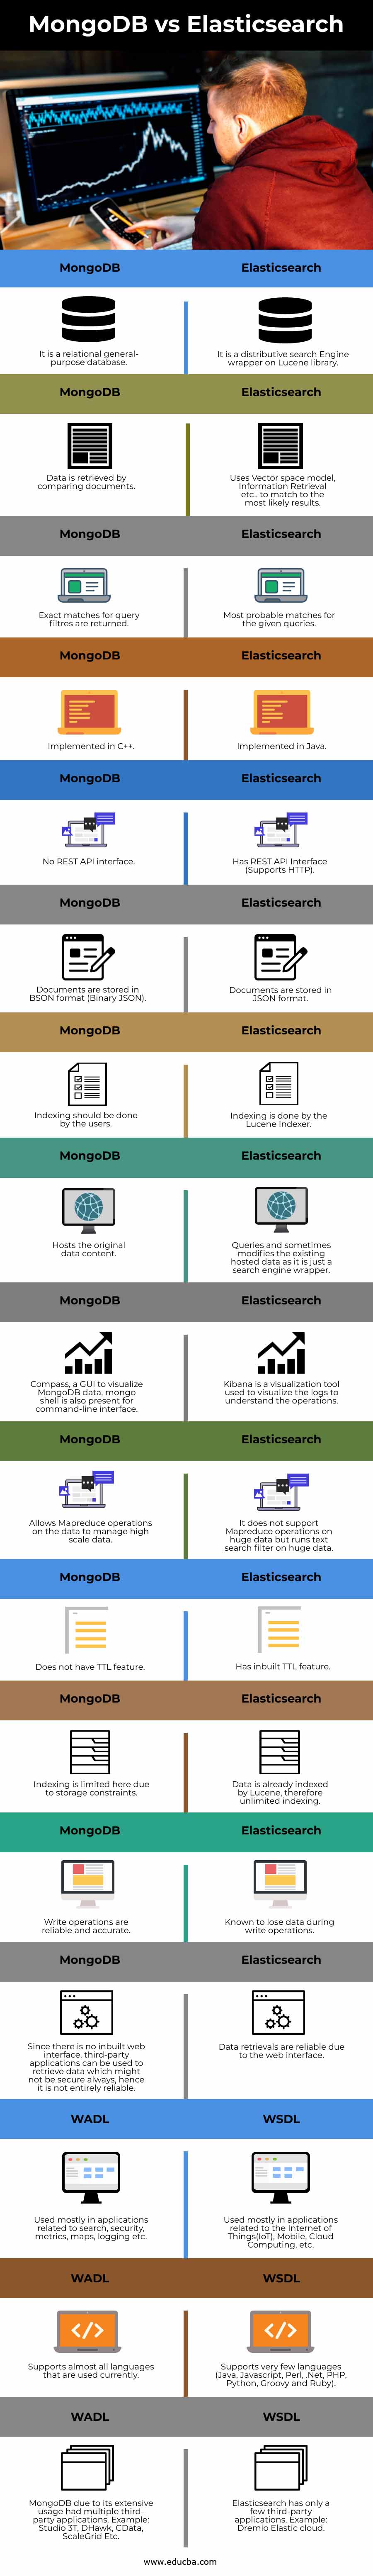 MongoDB vs Elasticsearch info